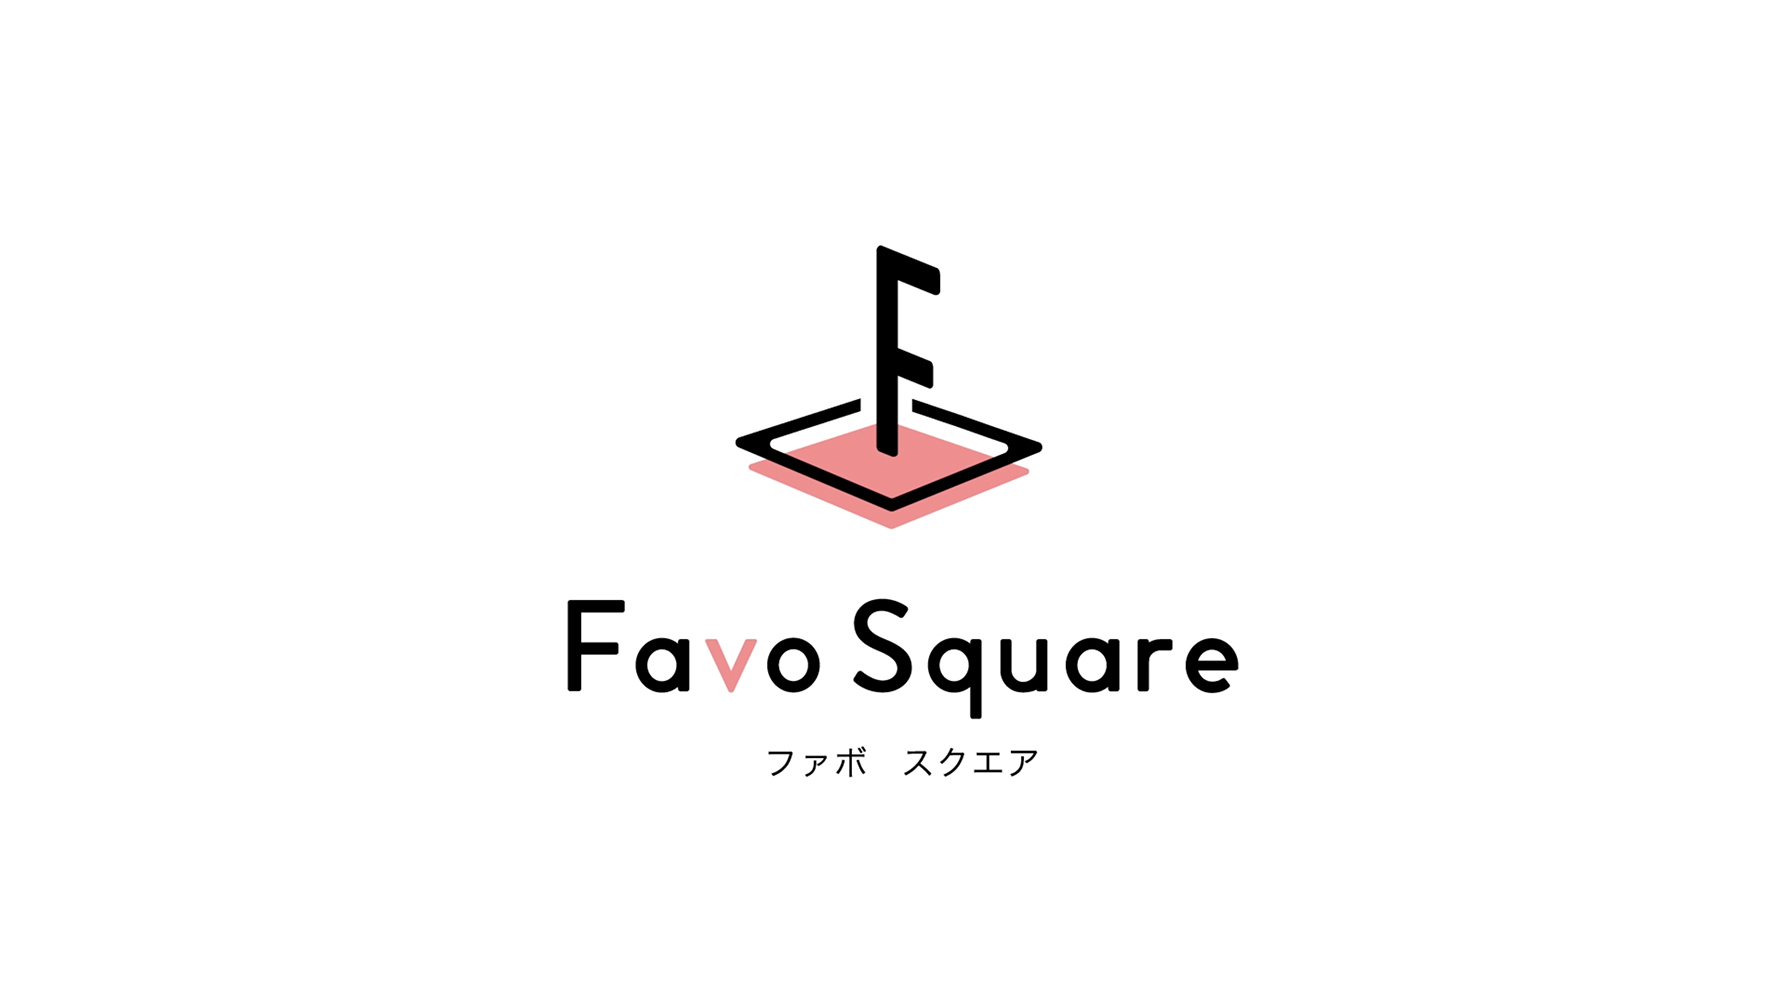 Favo Square